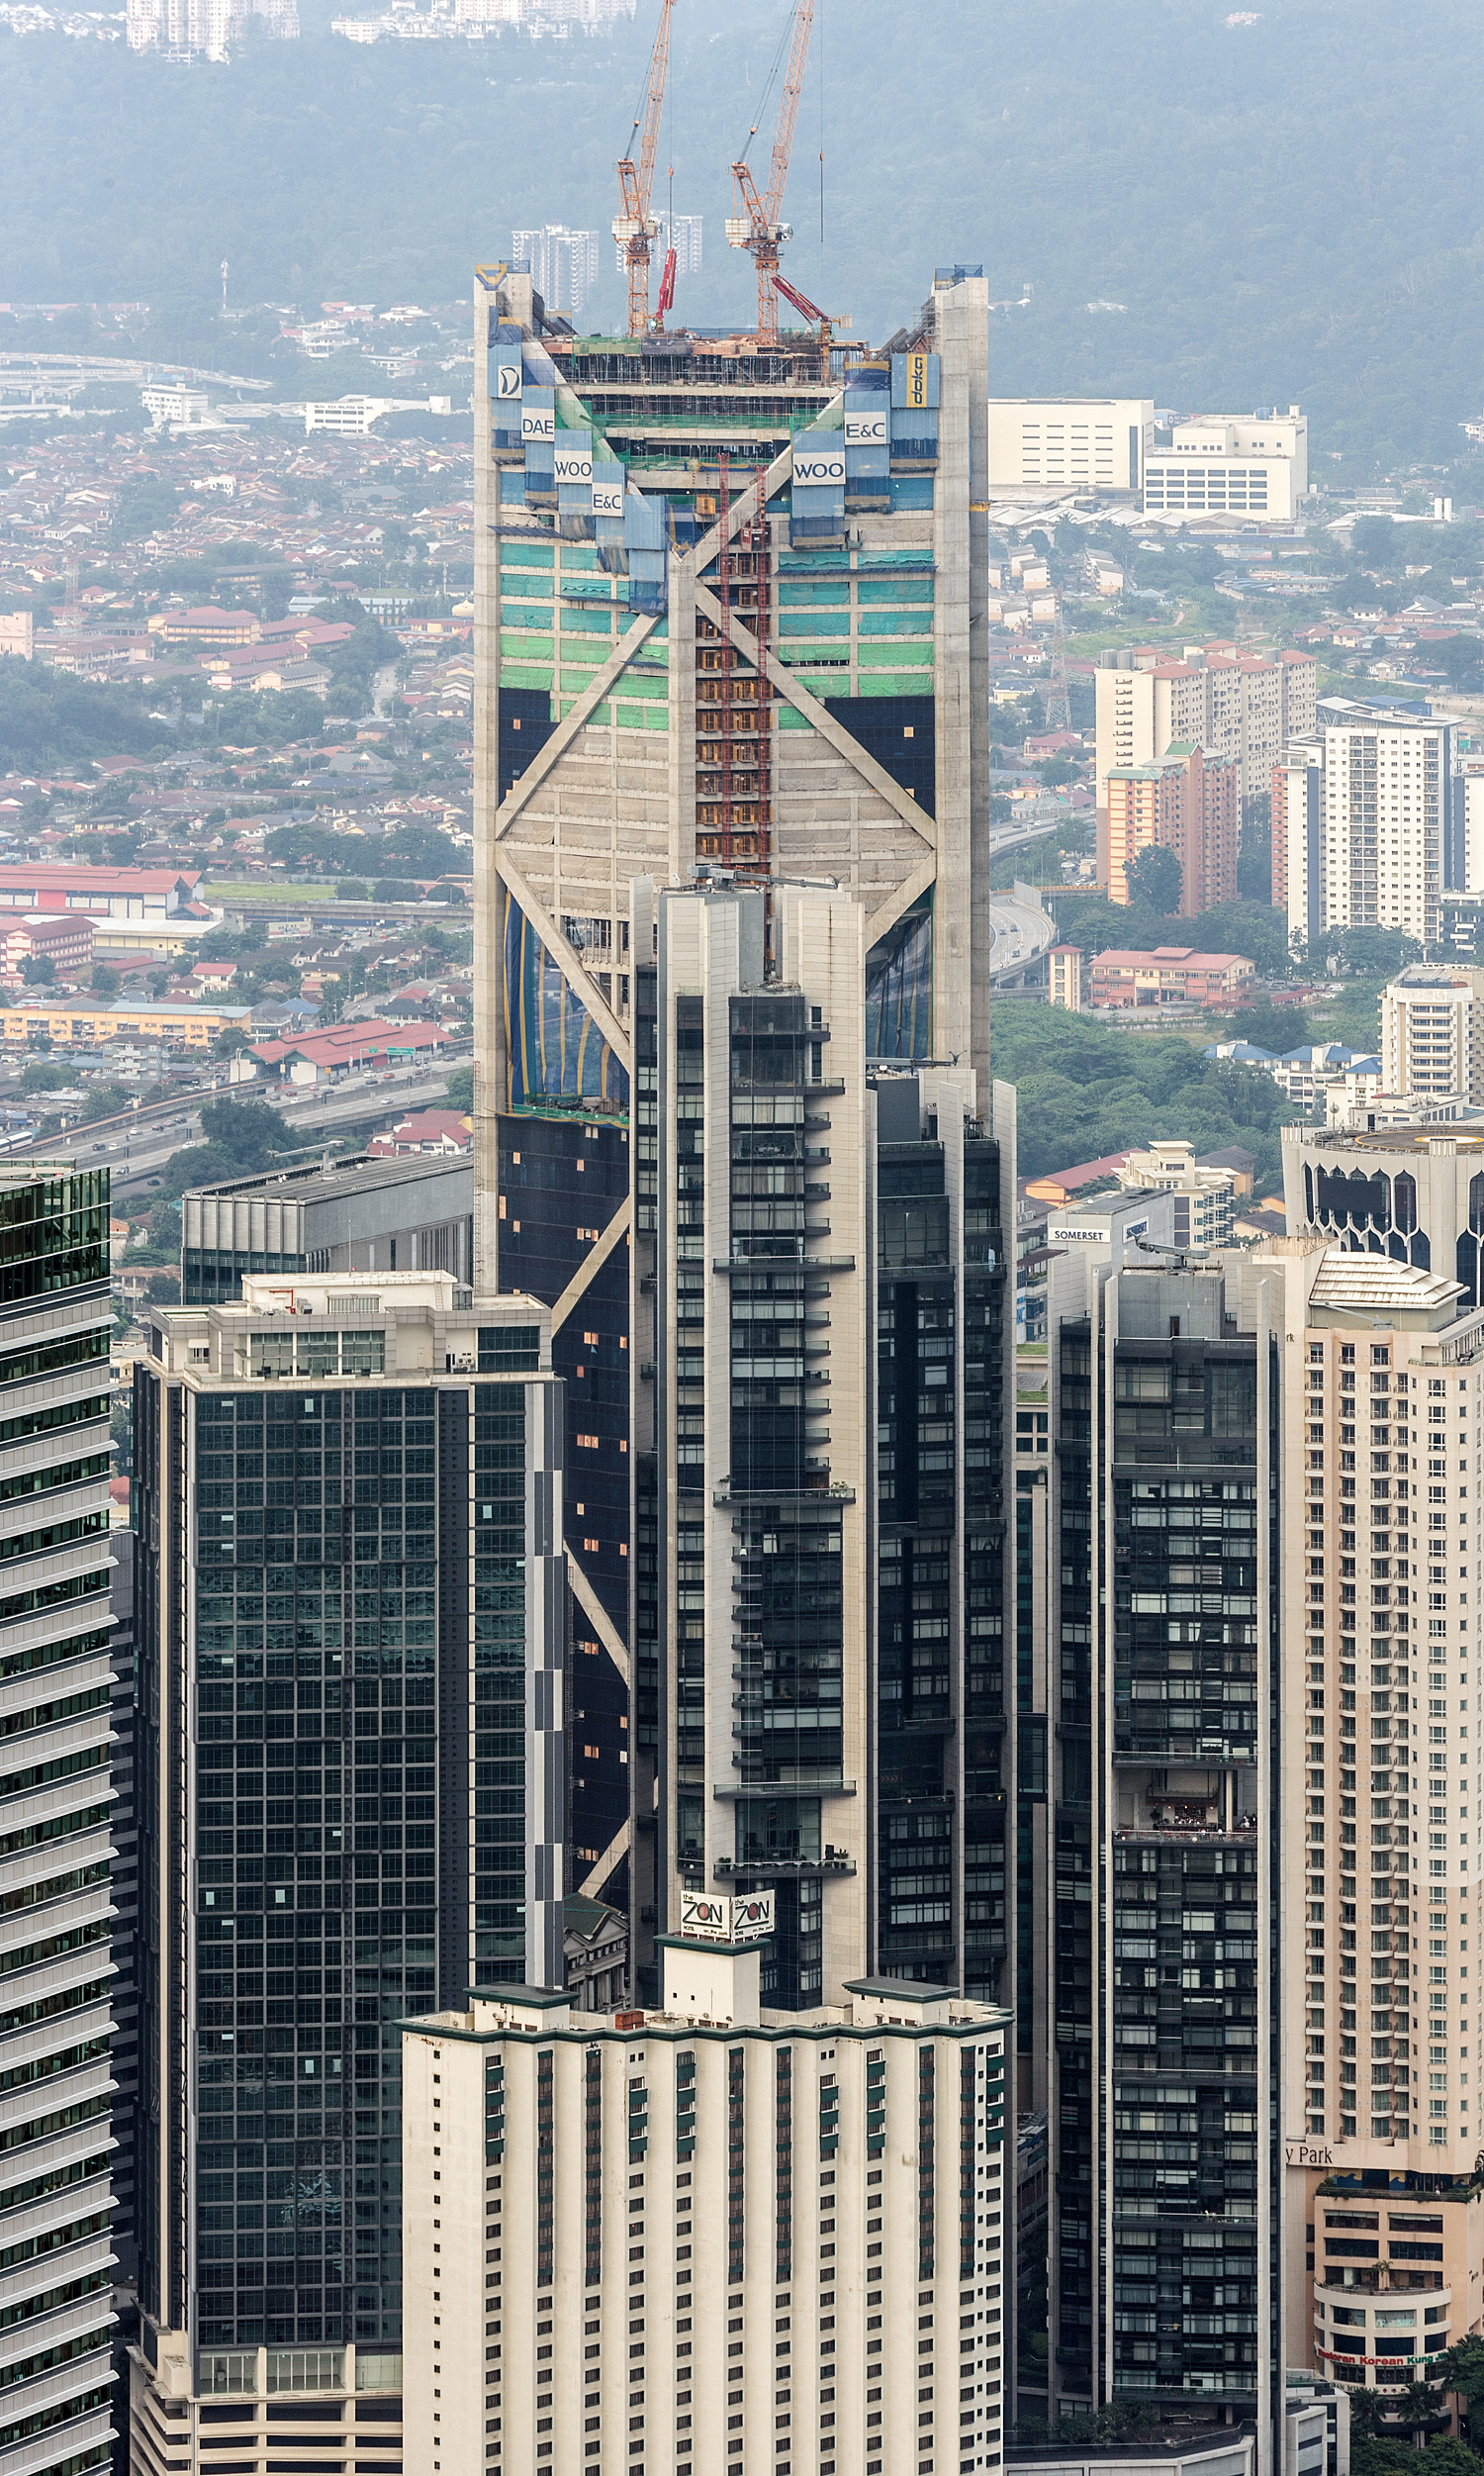 Ilham Tower, Kuala Lumpur - Under construction. © Mathias Beinling